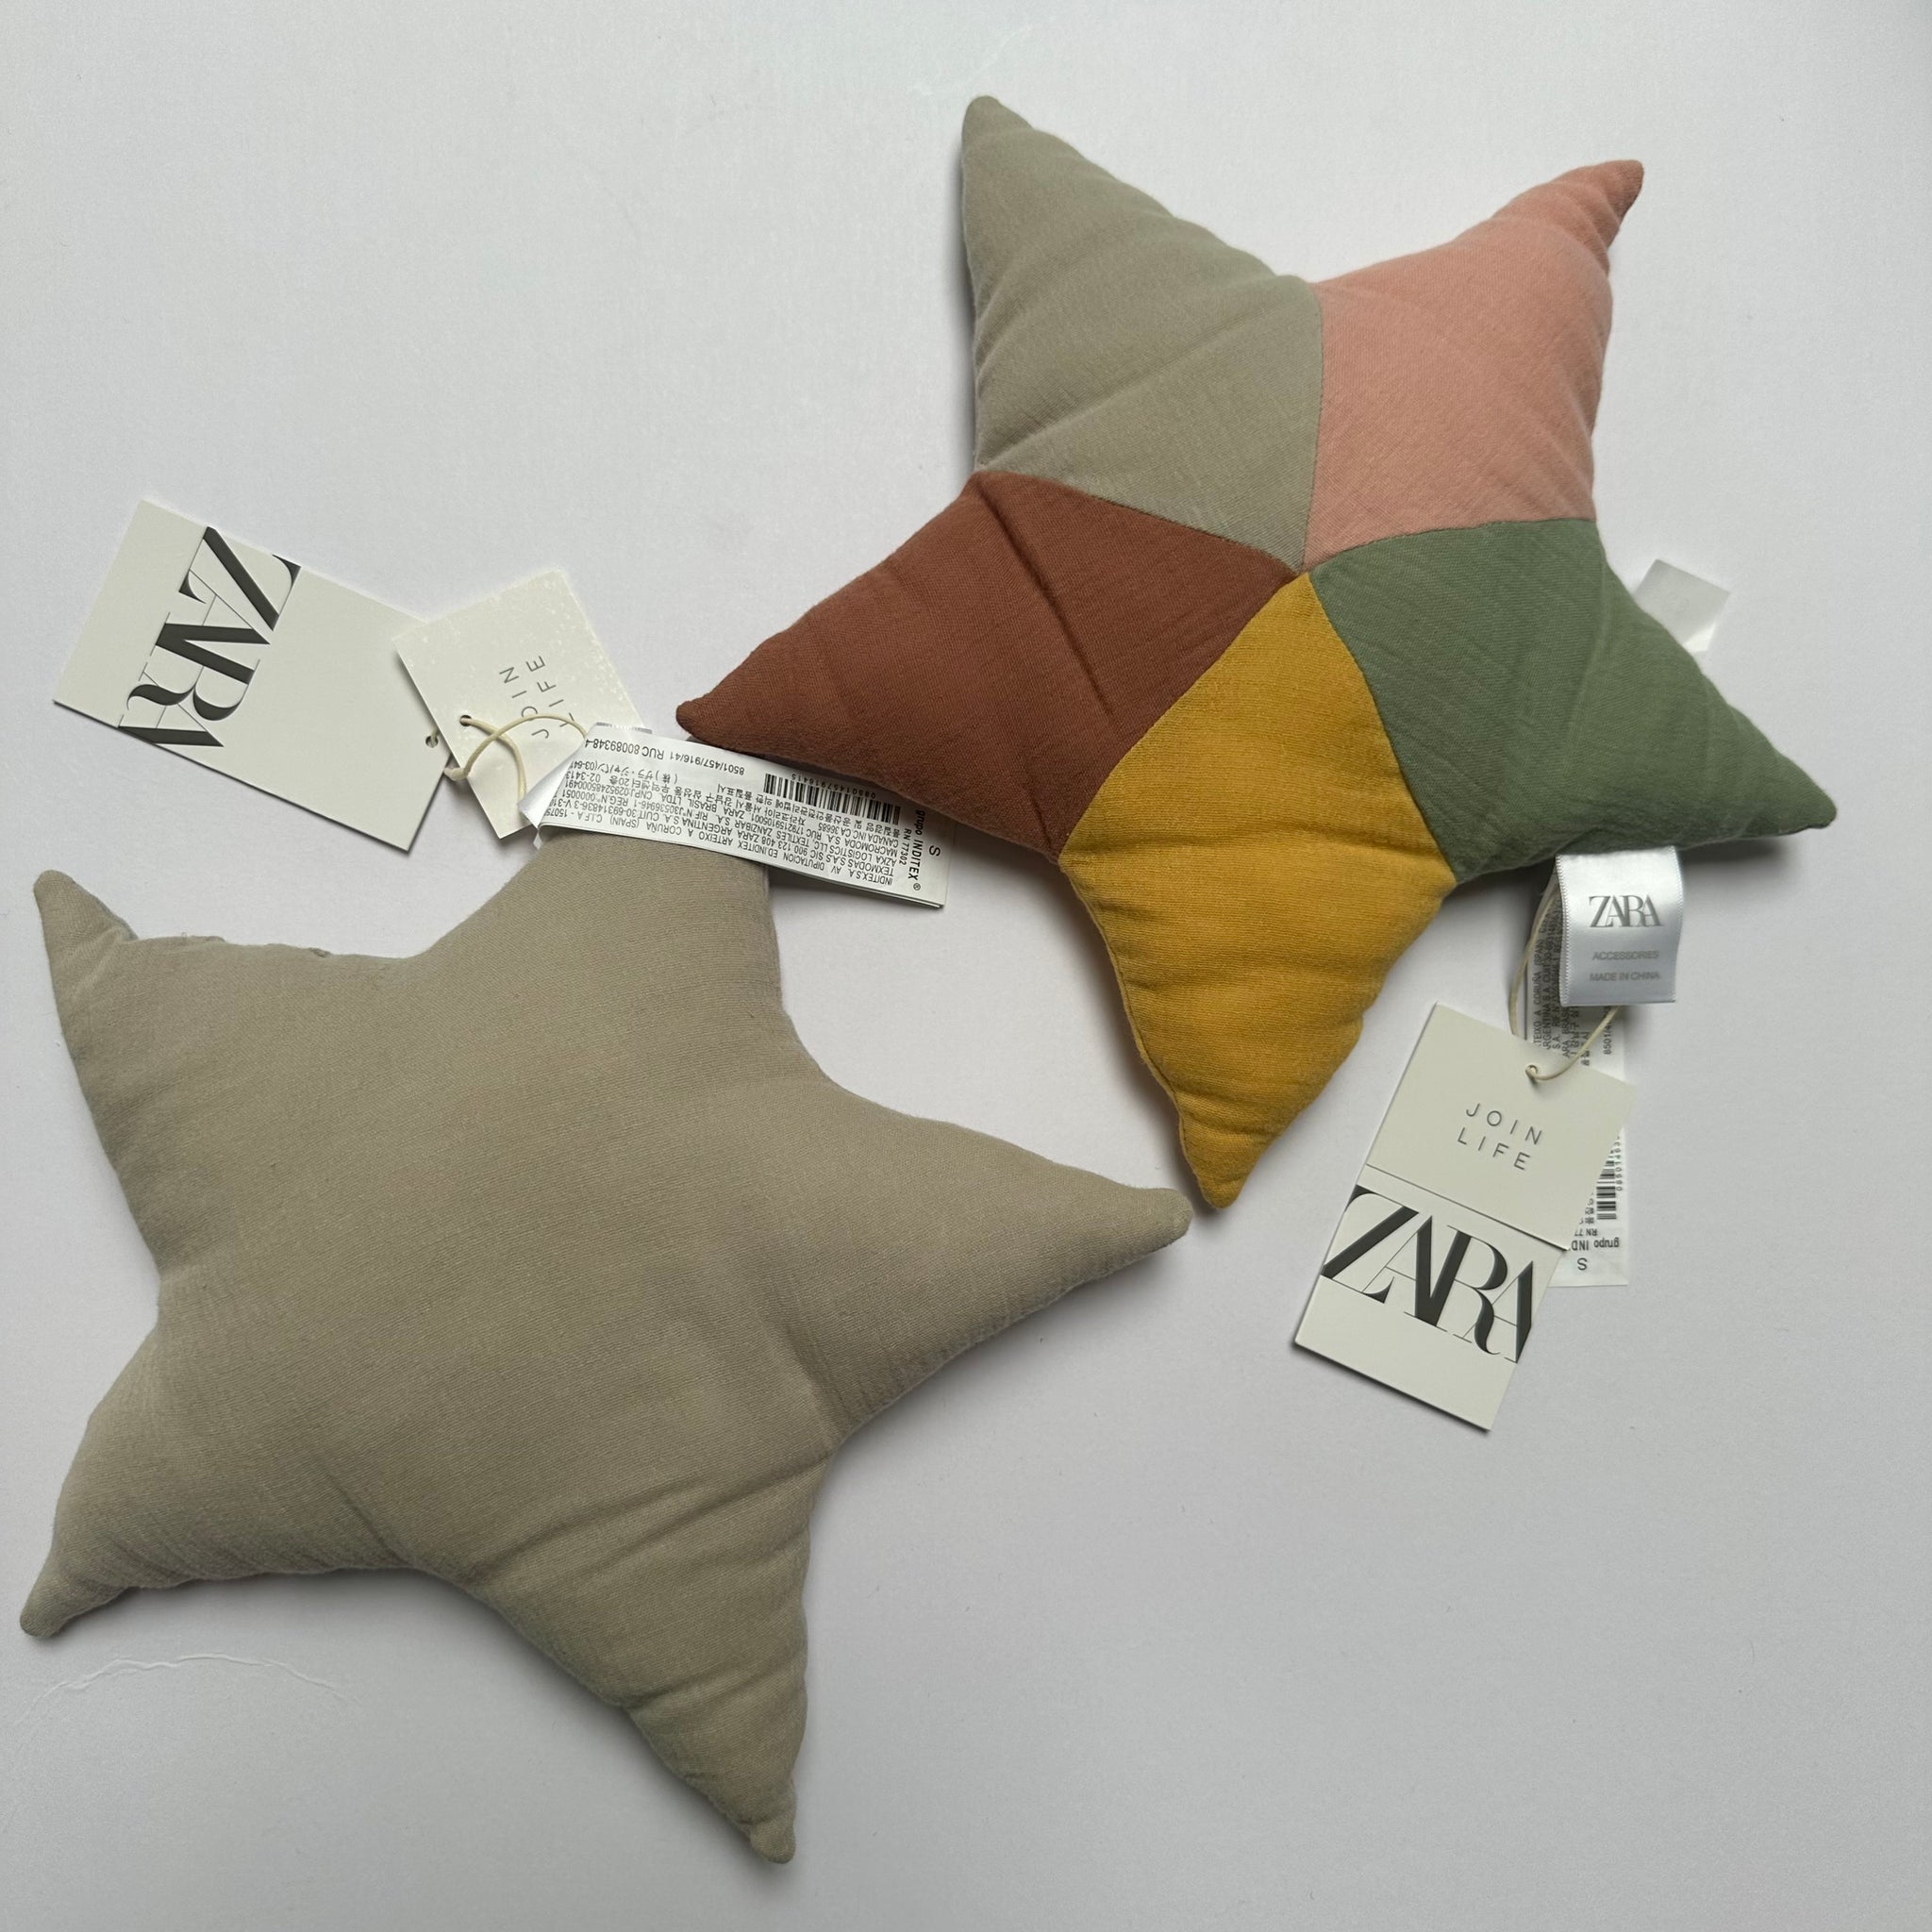 Zara Star Pillows